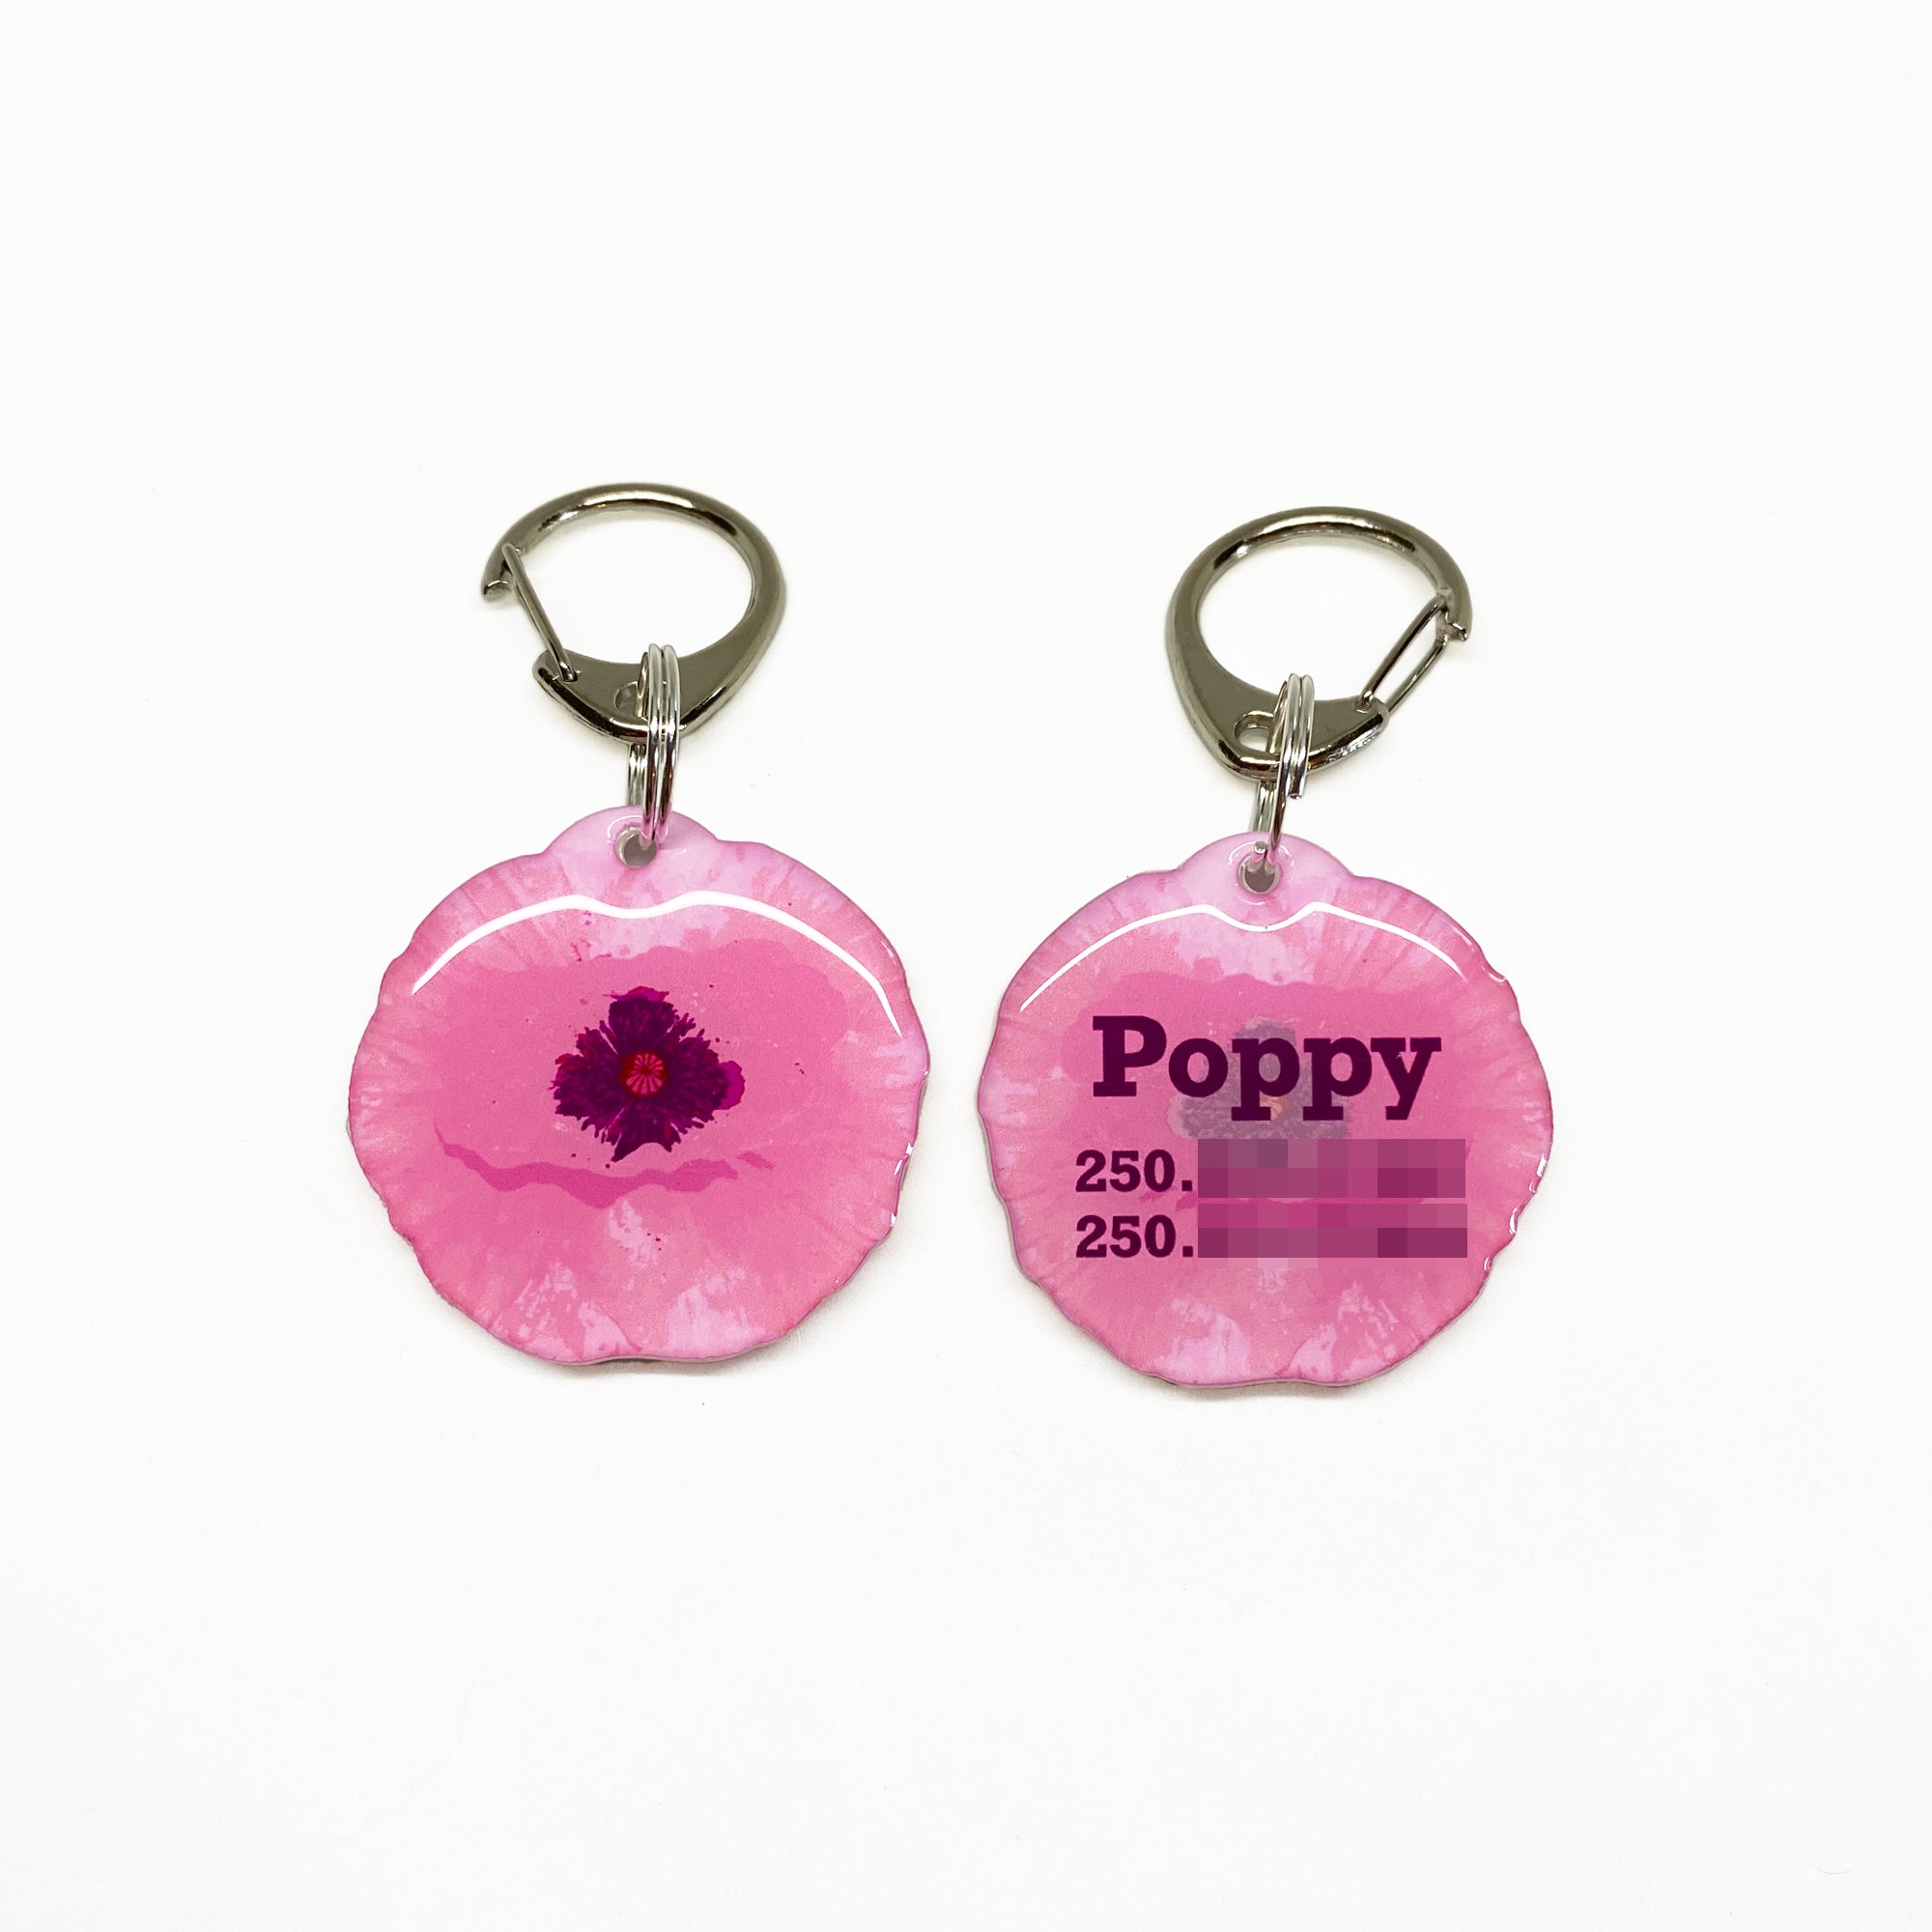 Poppy Pet ID Tag Dog Tag | Unique Pet ID Tags by Bashtags